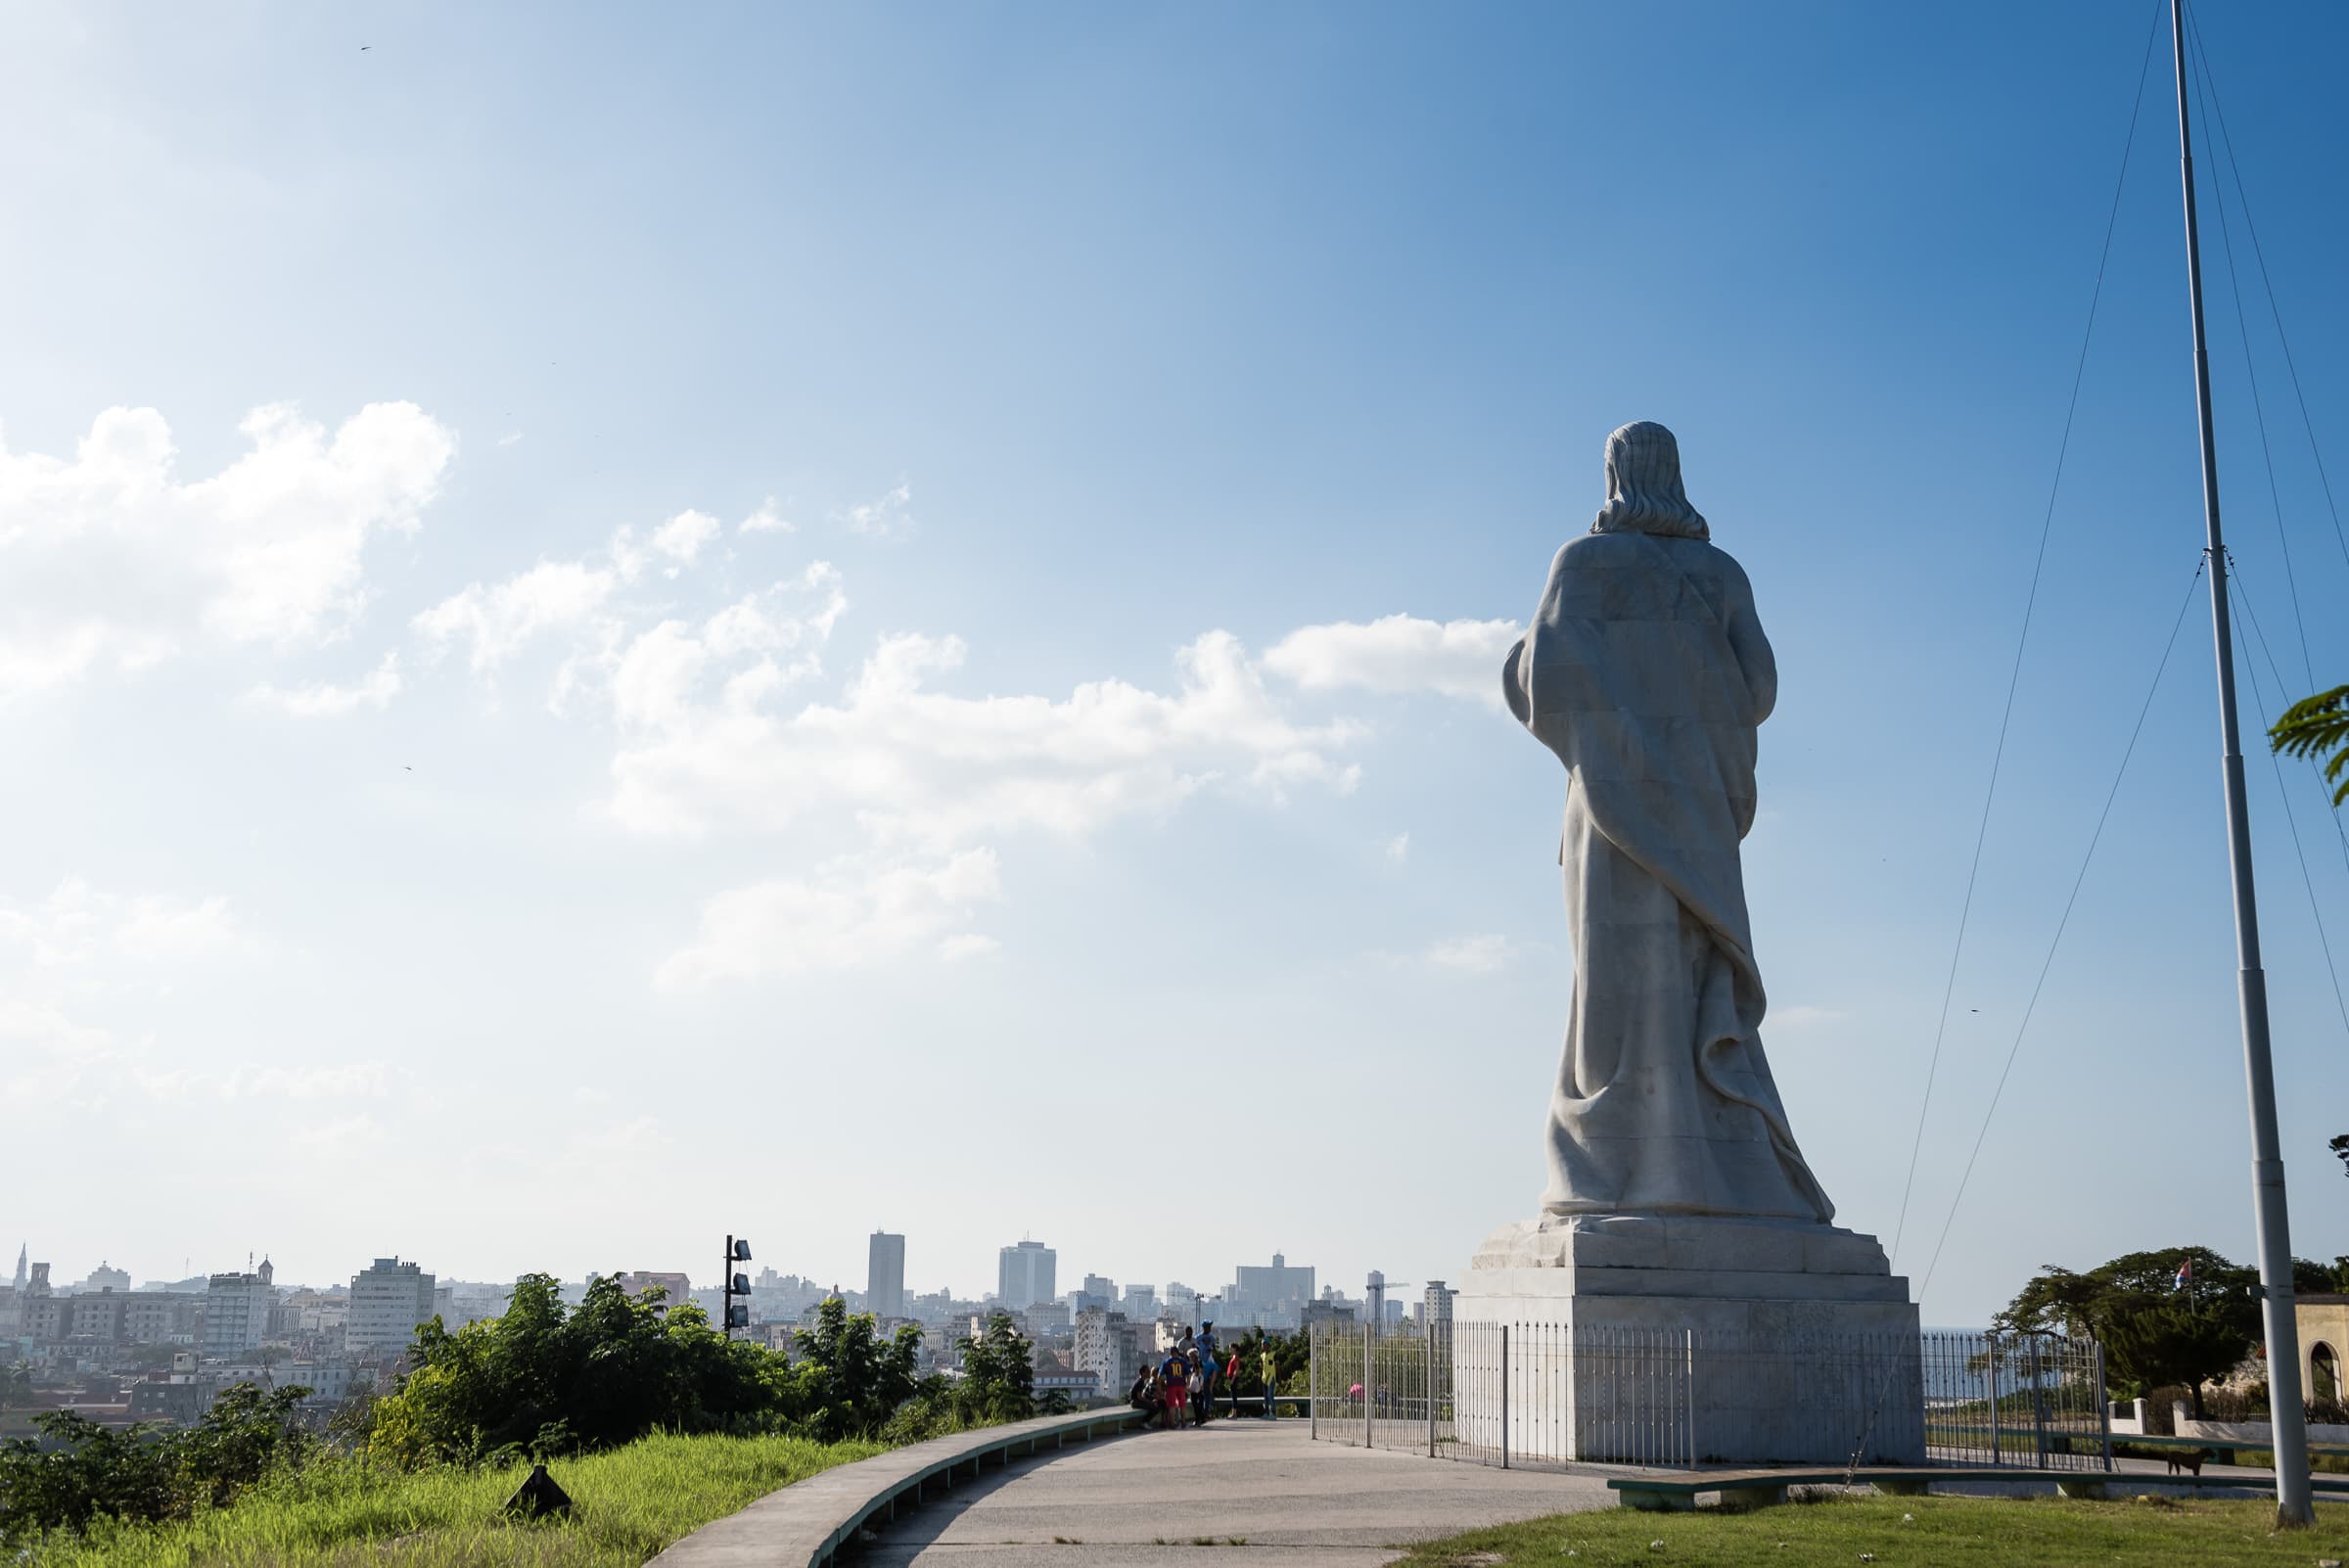 The Christ of Havana looking out over Havana